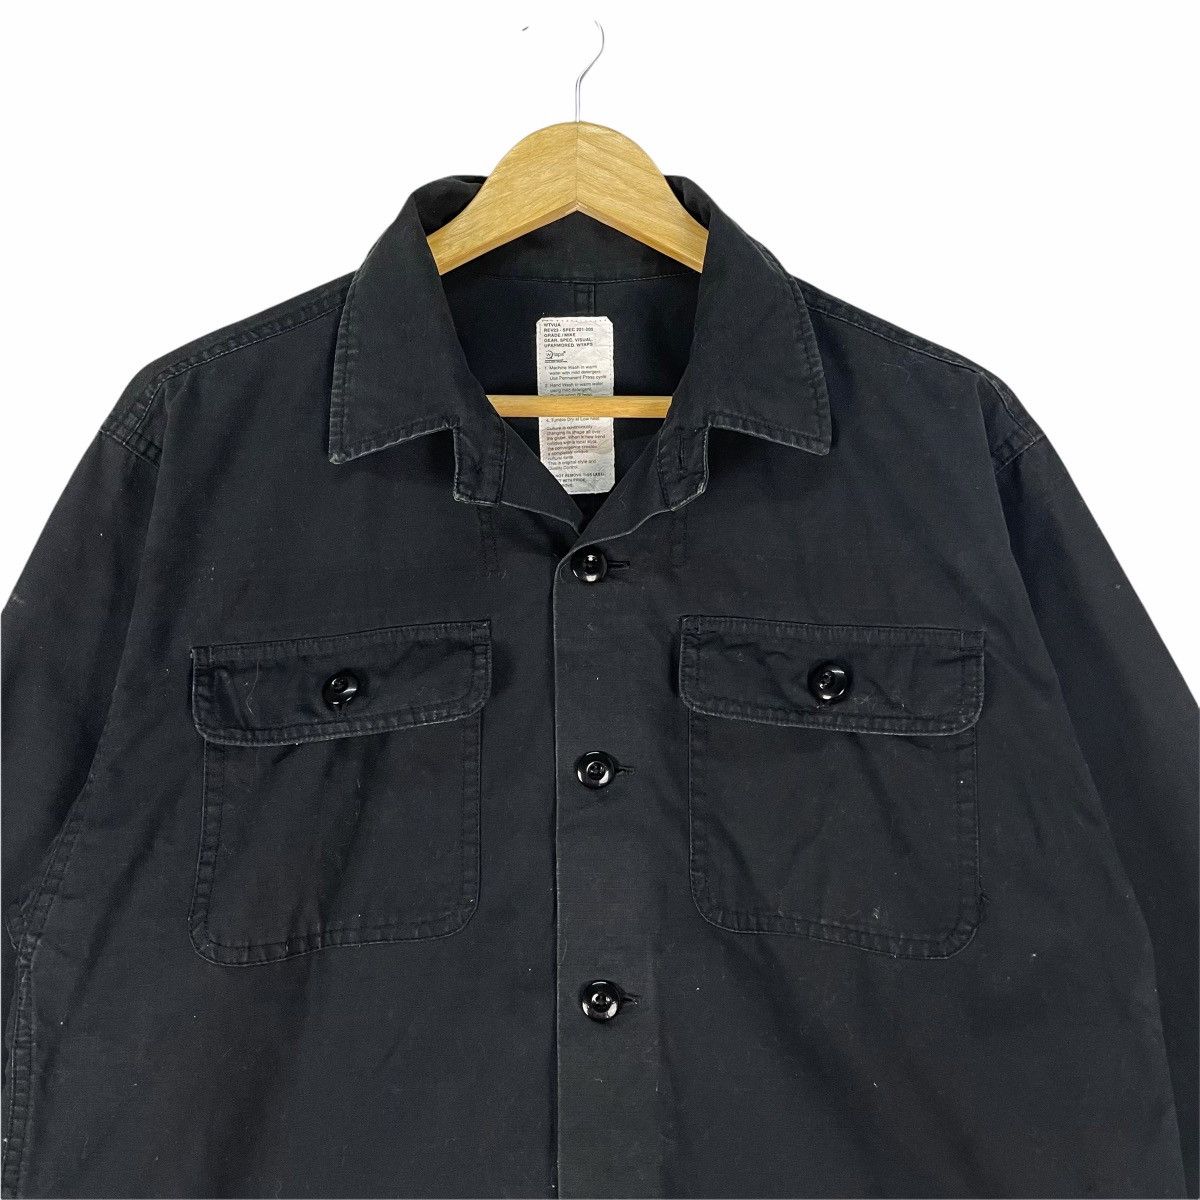 ⚡️WTAPS Workwear Button Up Shirts - 3